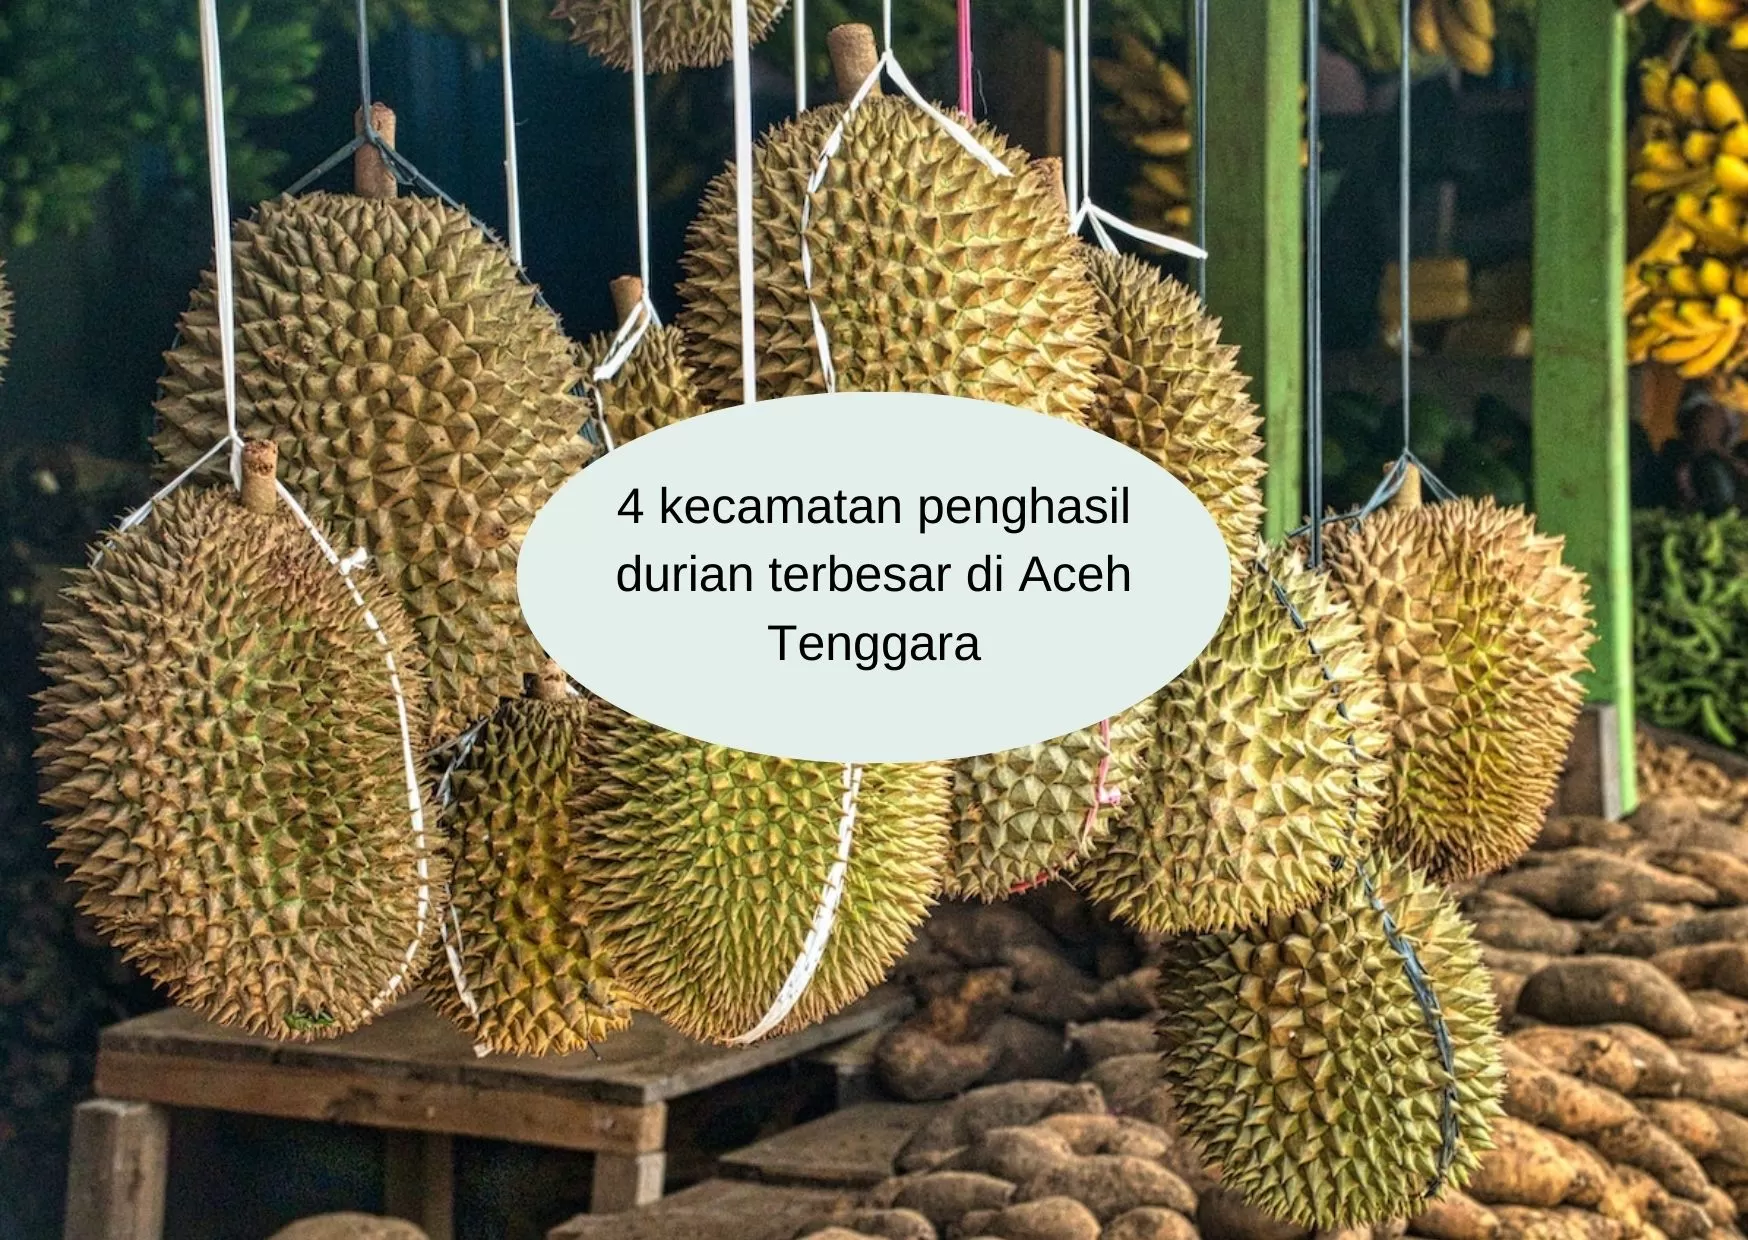 4 Kecamatan Penghasil Durian Terbesar di Aceh Tenggara, Gak Nyangka Juaranya Bukan Badar atau Ketambe, Tapi?